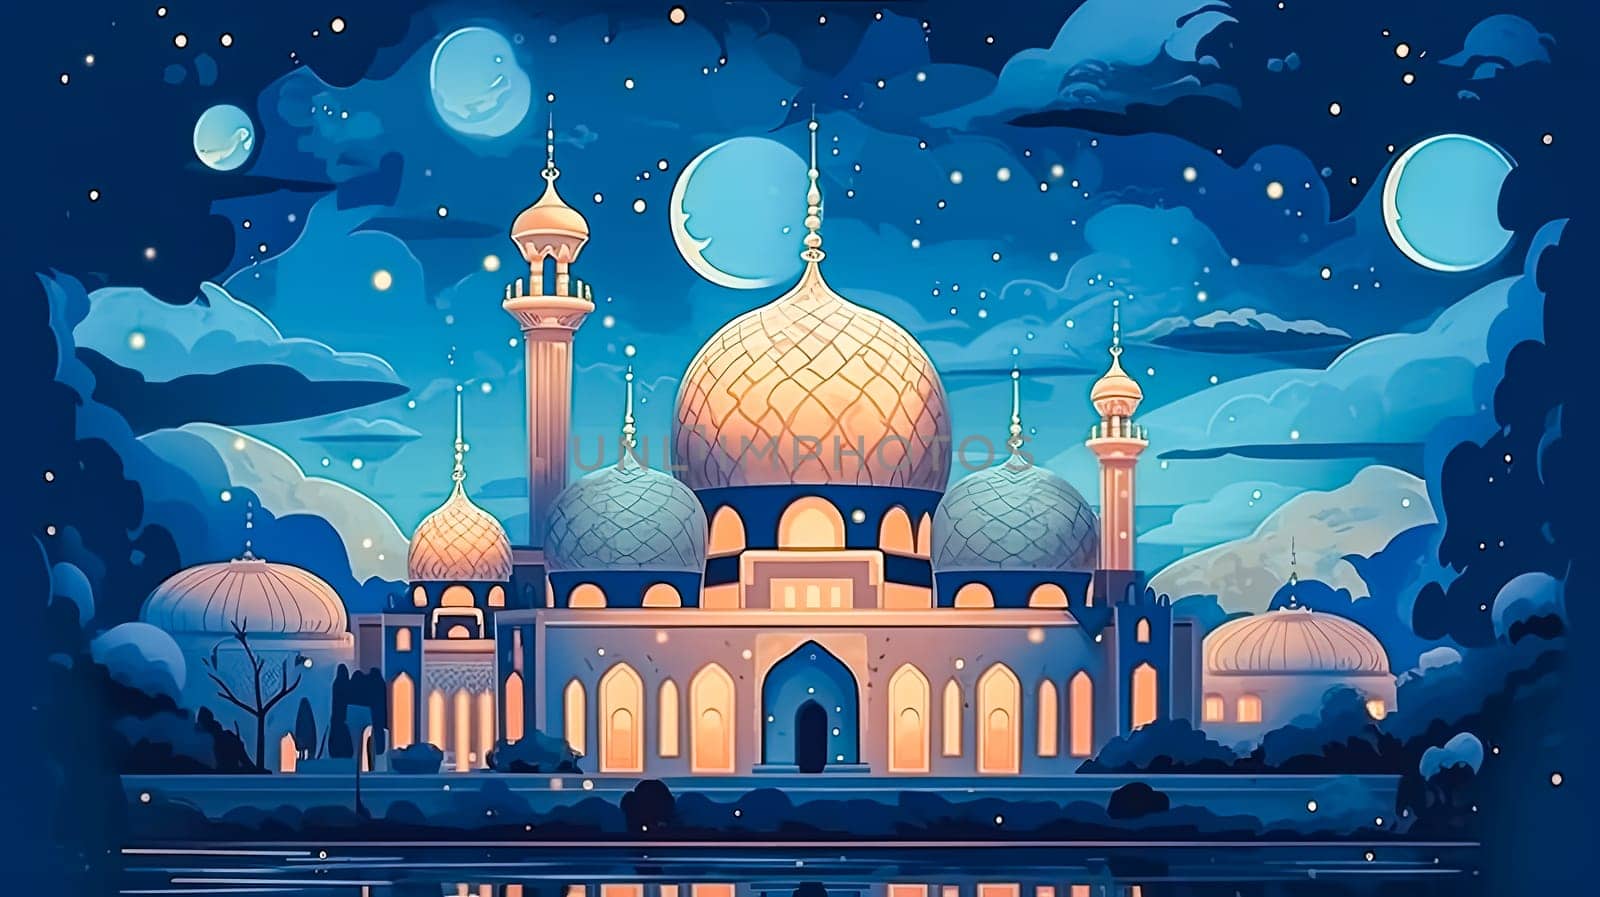 Ramadan brilliance, A mosque illuminated in celebration vibrant colors and Ramadan Mubarak wishes echoing the joyous spirit of the season